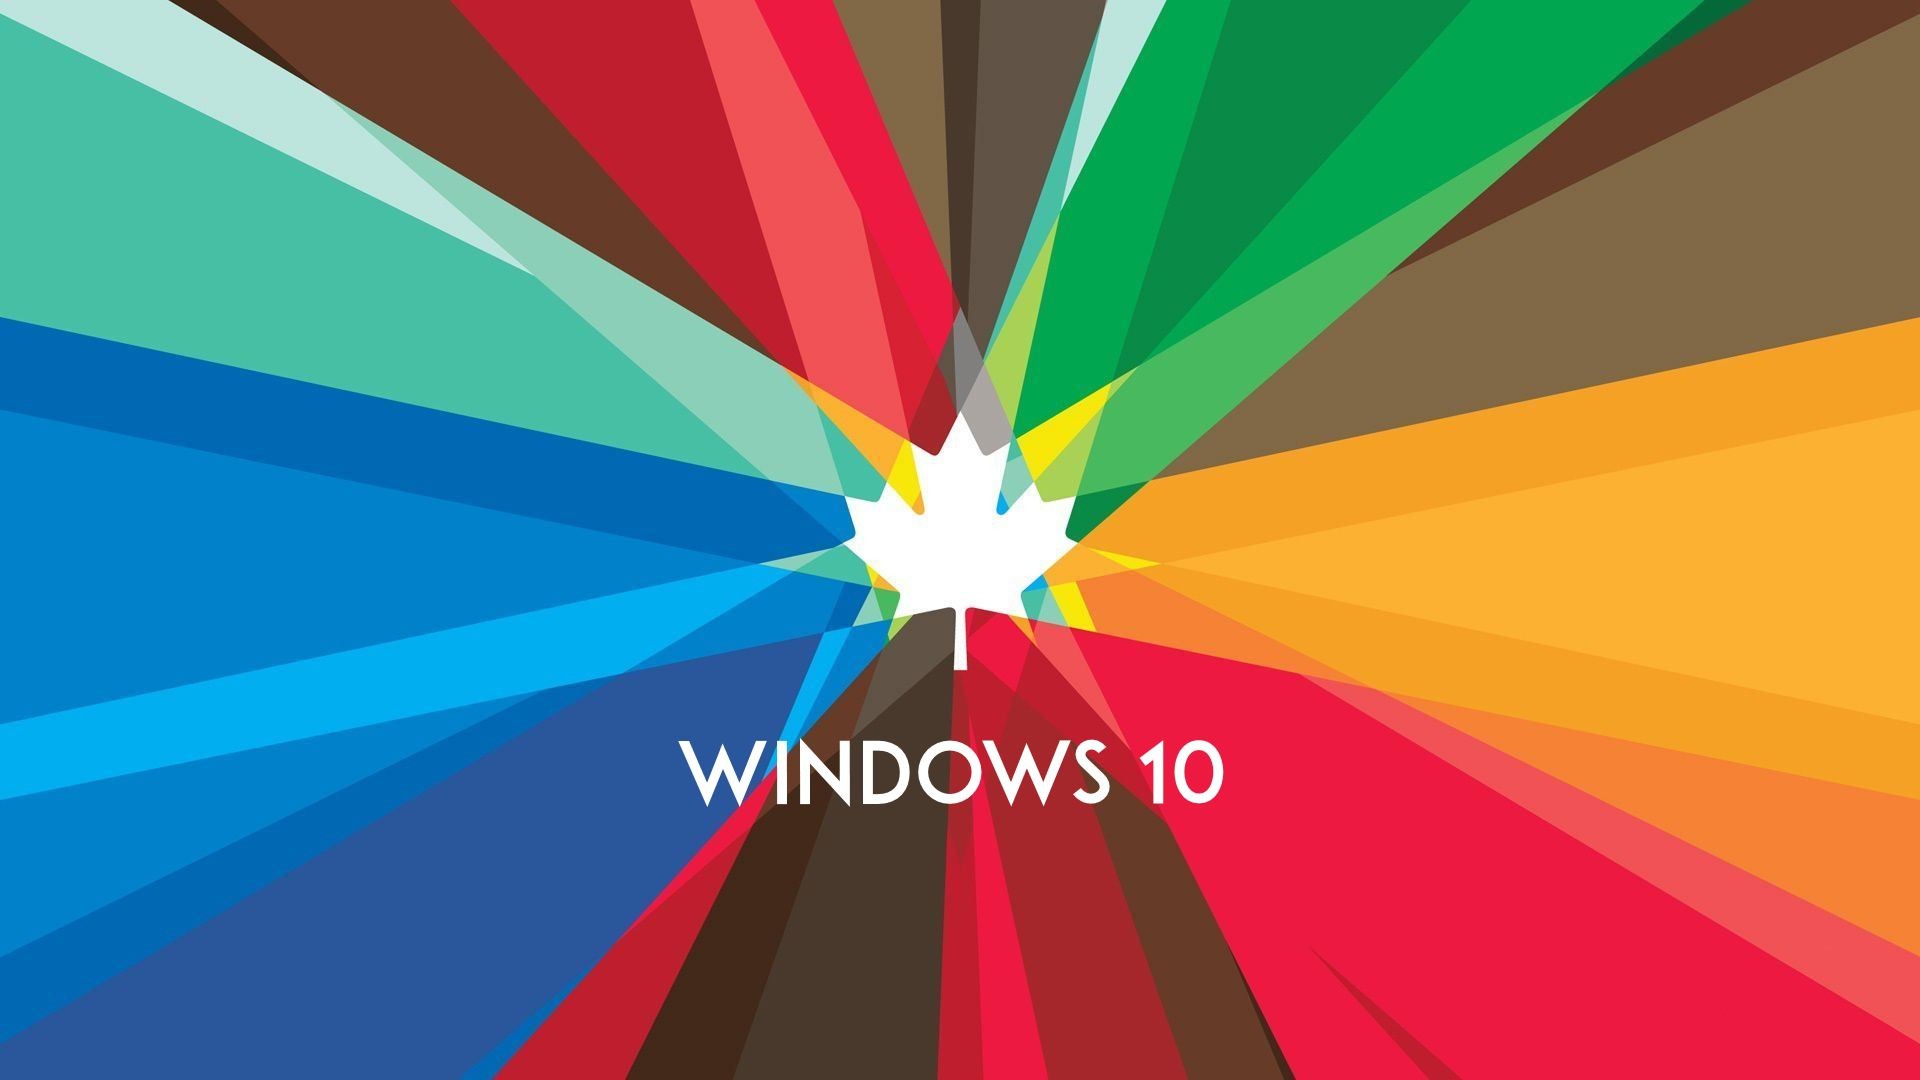 1920x1080 MX Windows Adorable Desktop Wallpapers for Free